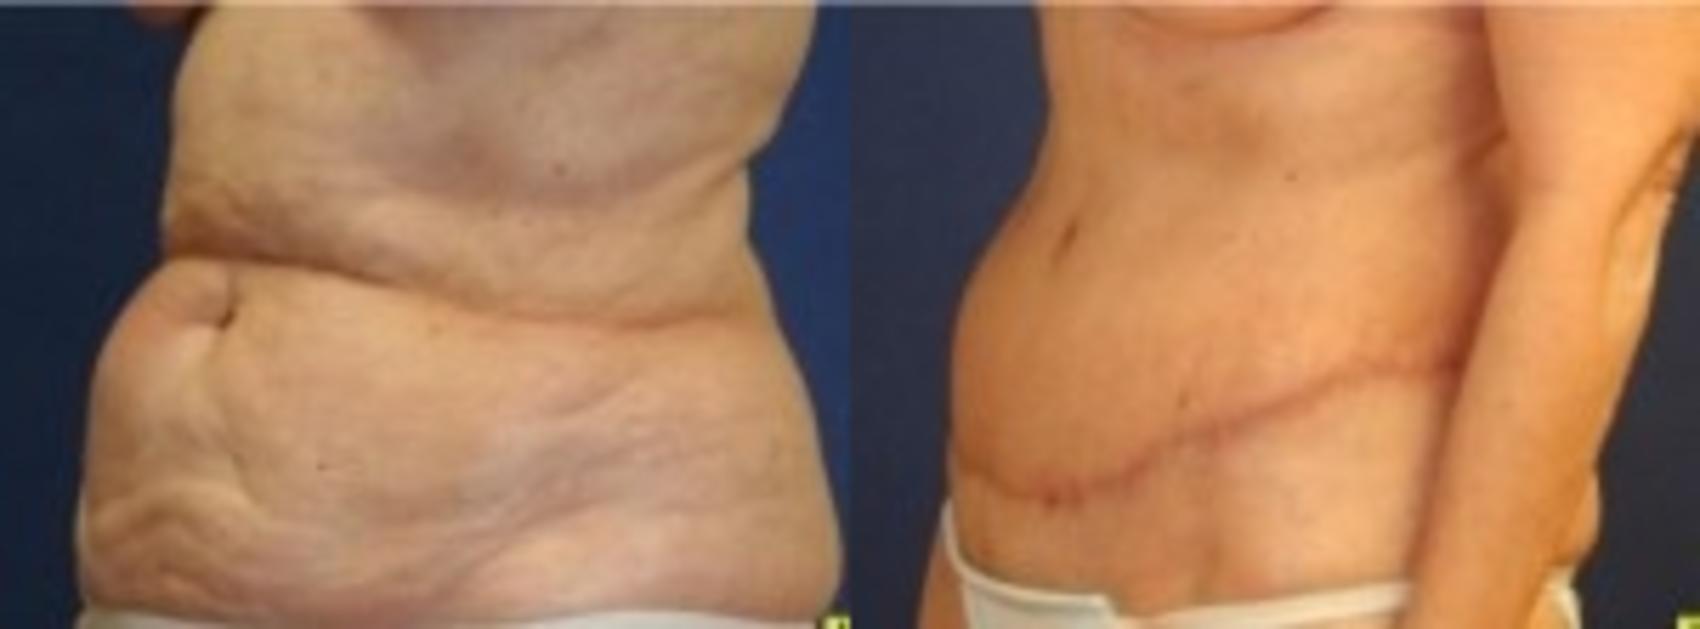 Before & After Liposuction Case 236 Left Oblique View in Ann Arbor, MI